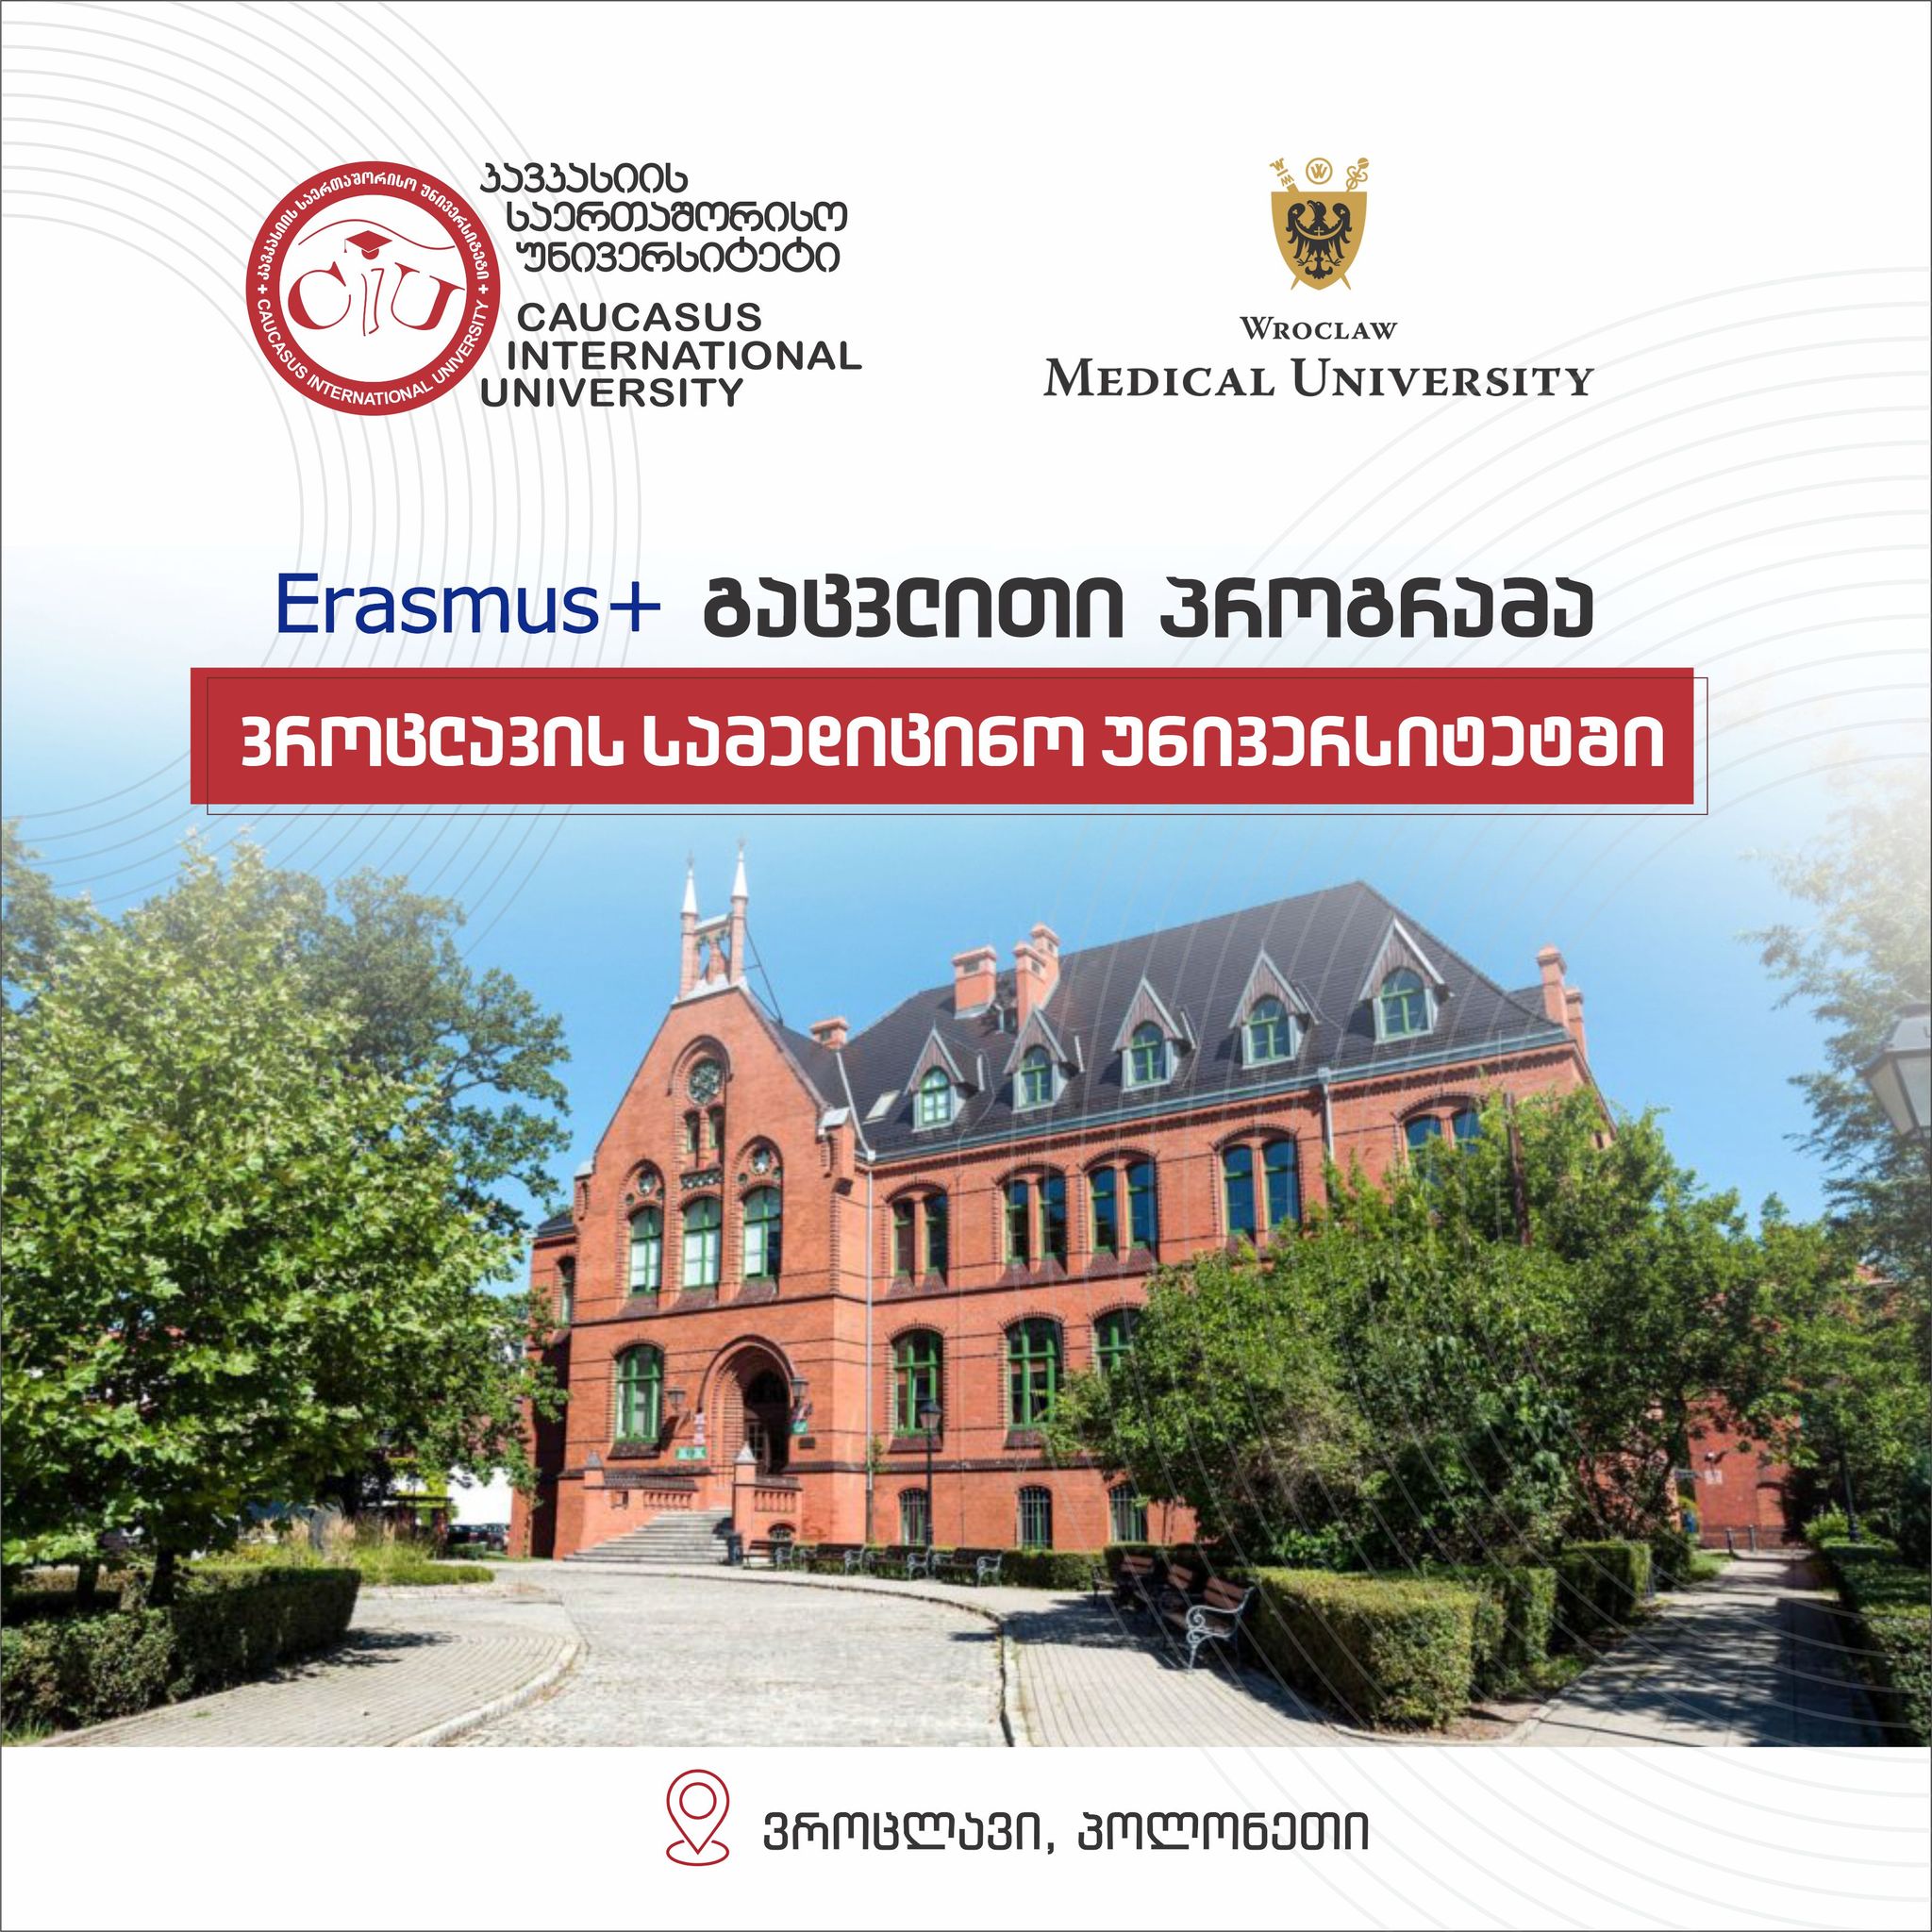 Erasmus+ Exchange Program at Wroclaw Medical University (Wroclaw, Poland)